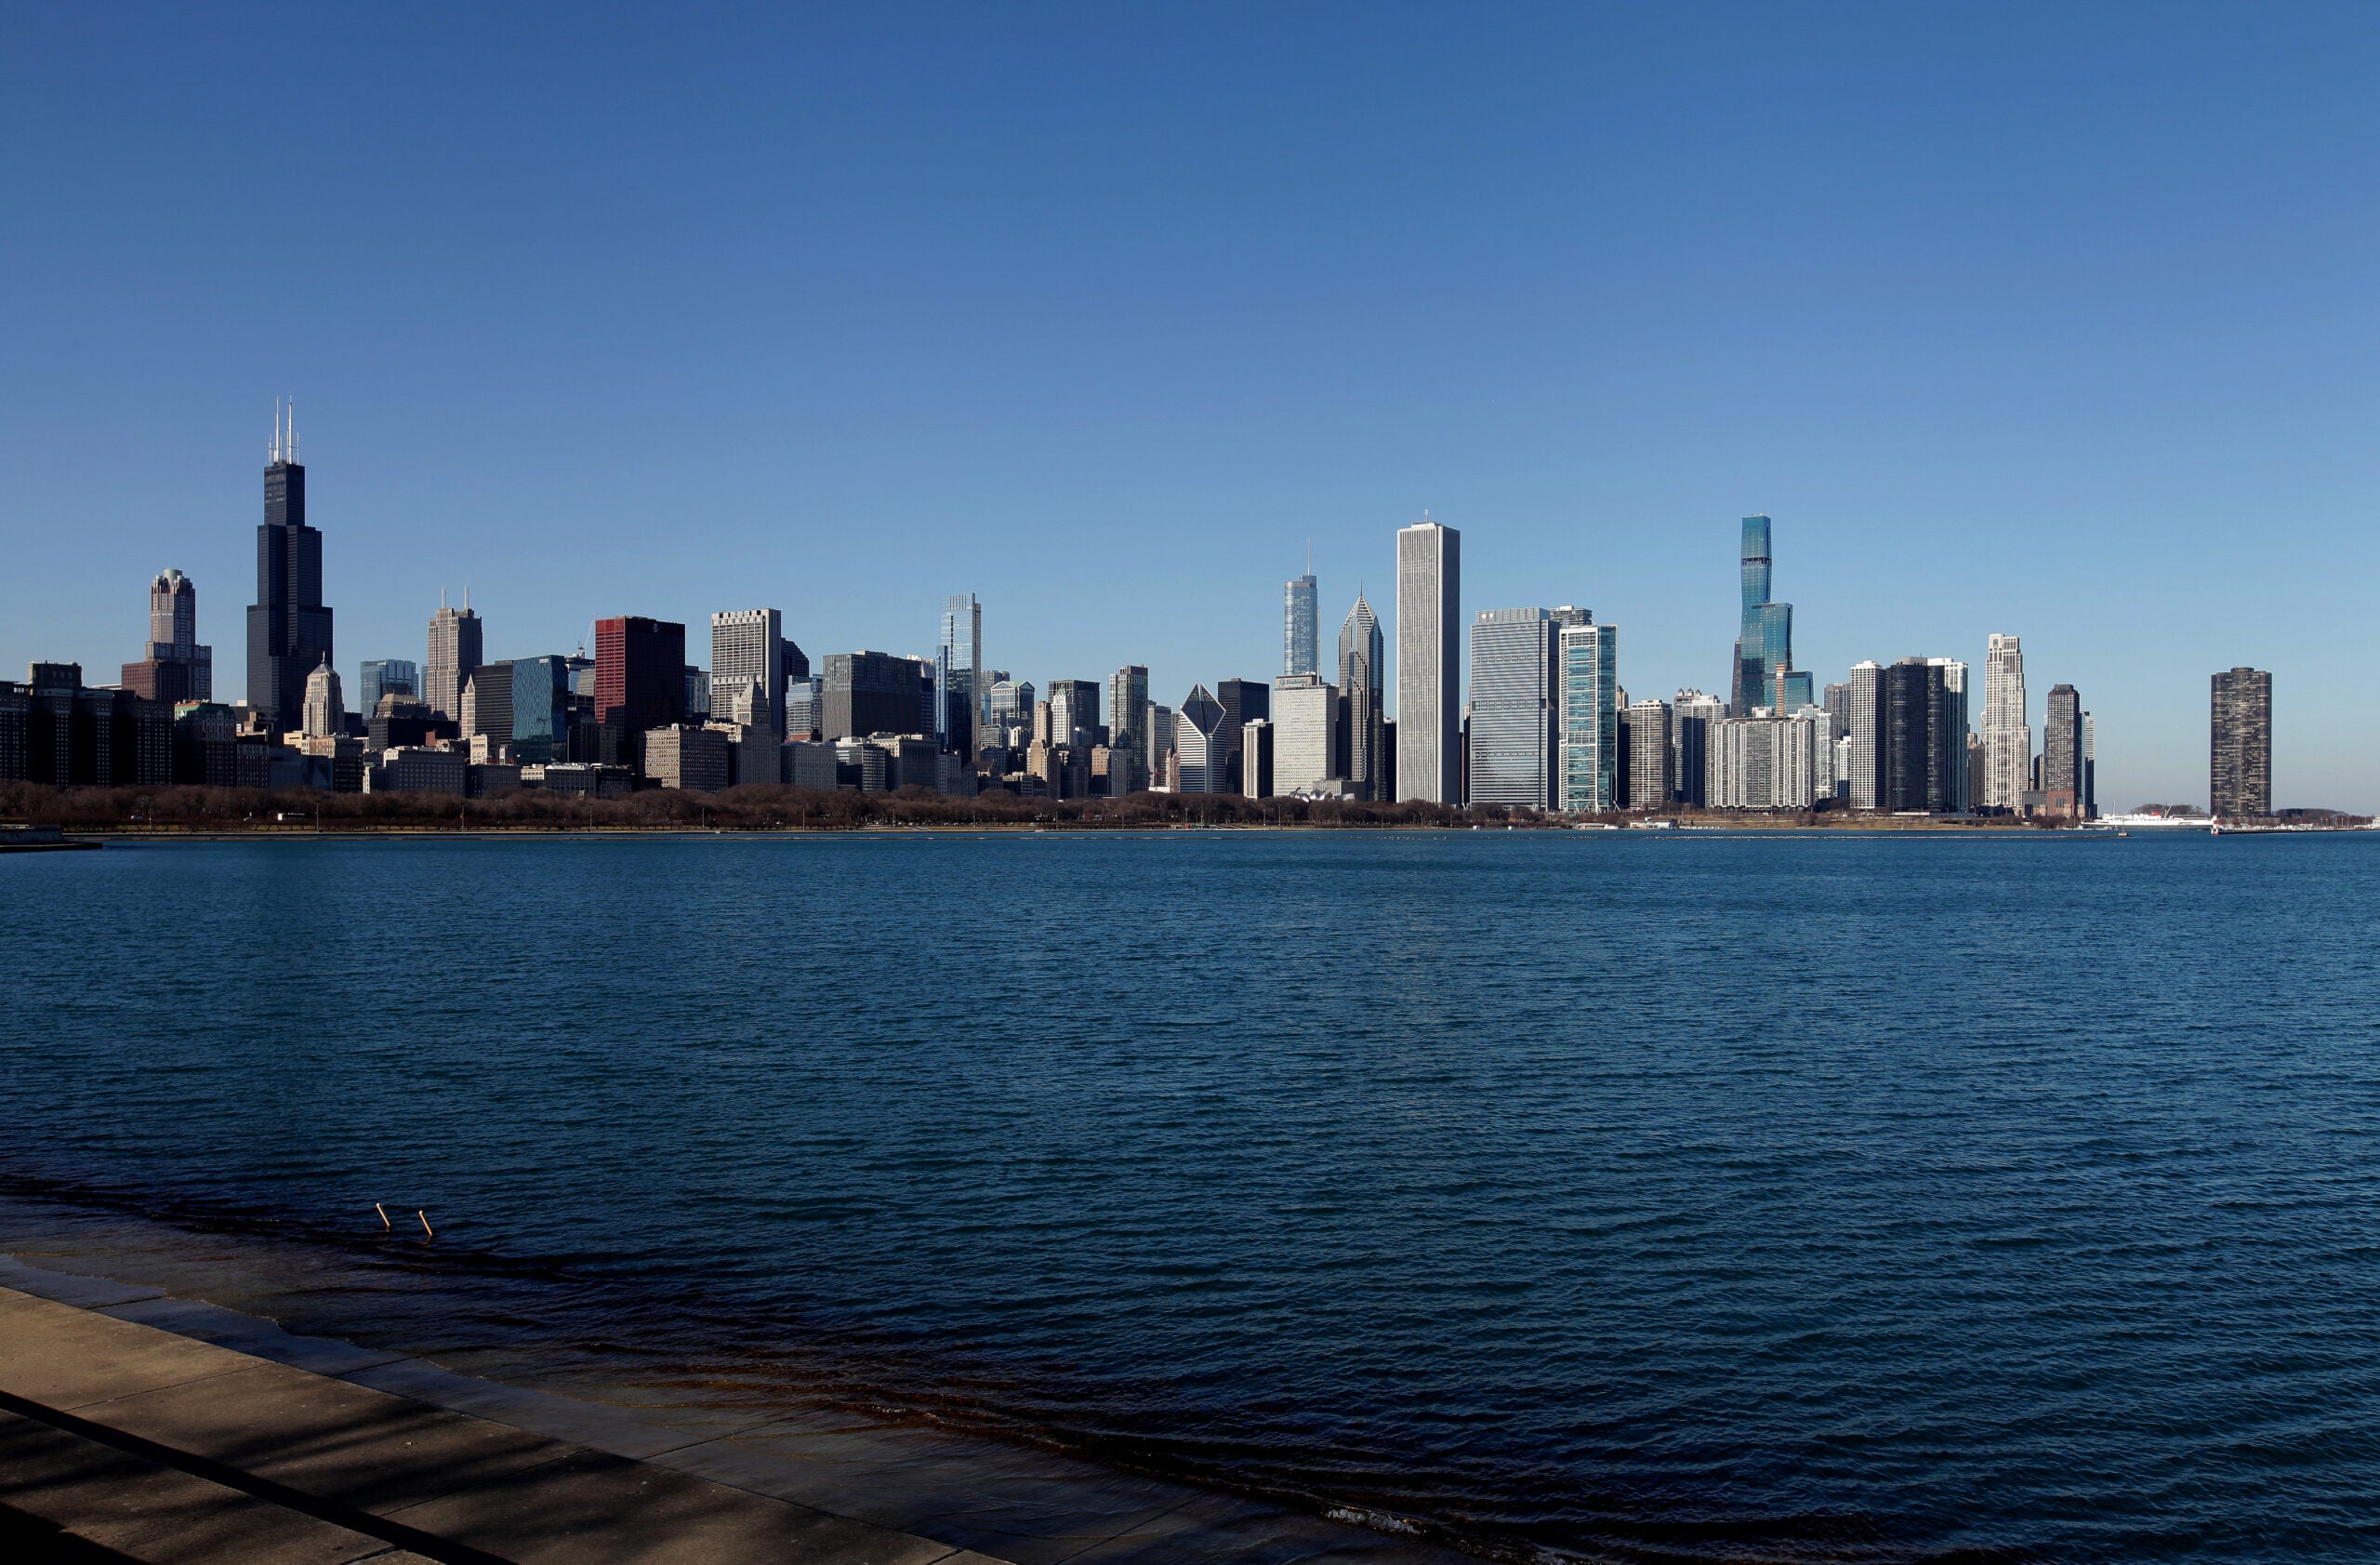 The Chicago, Illinois skyline